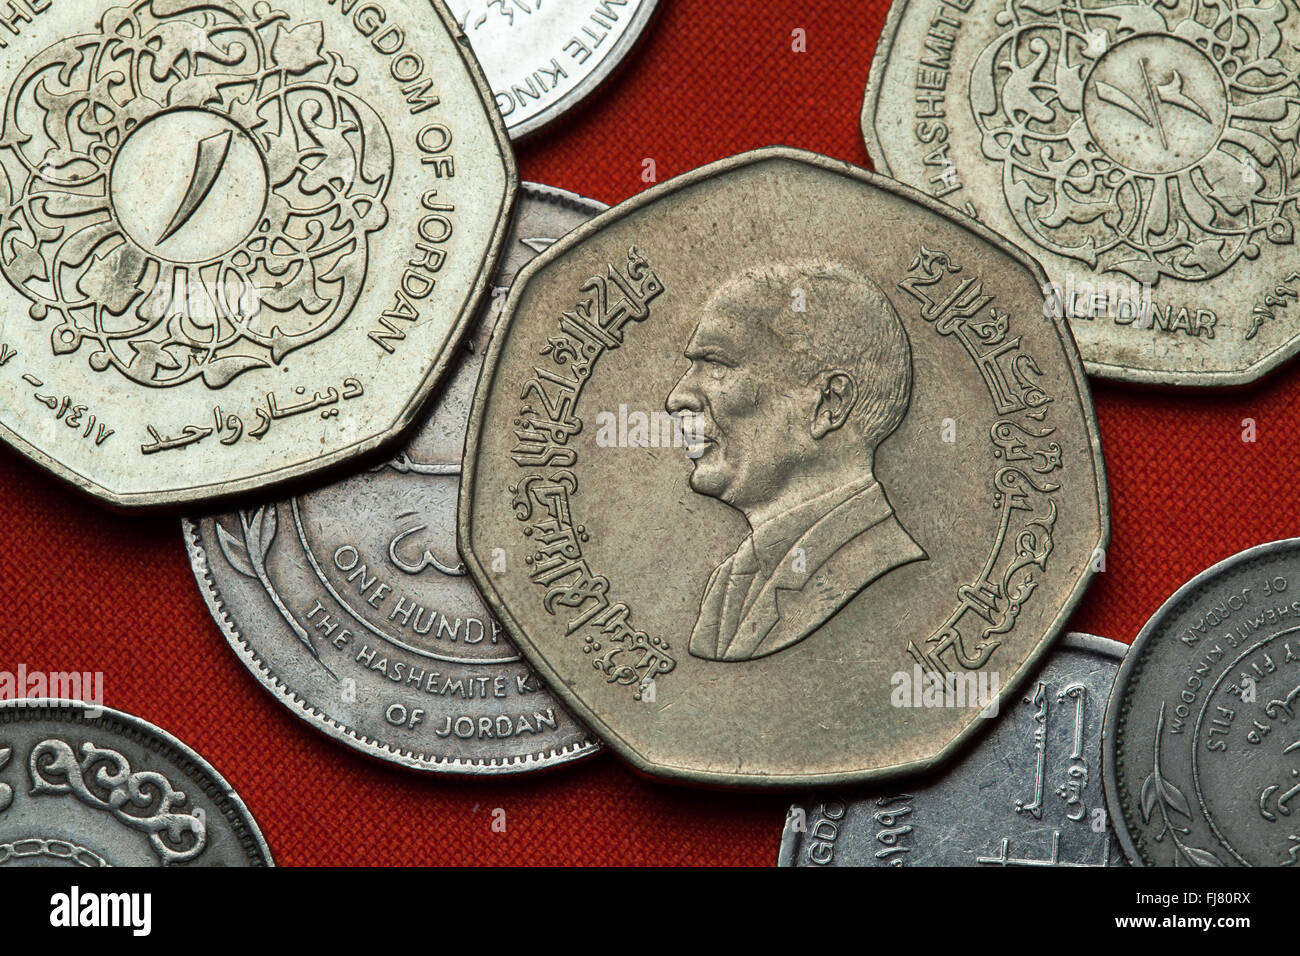 Coins of Jordan. King Hussein bin Talal of Jordan depicted in the Jordanian  one dinar coin Stock Photo - Alamy